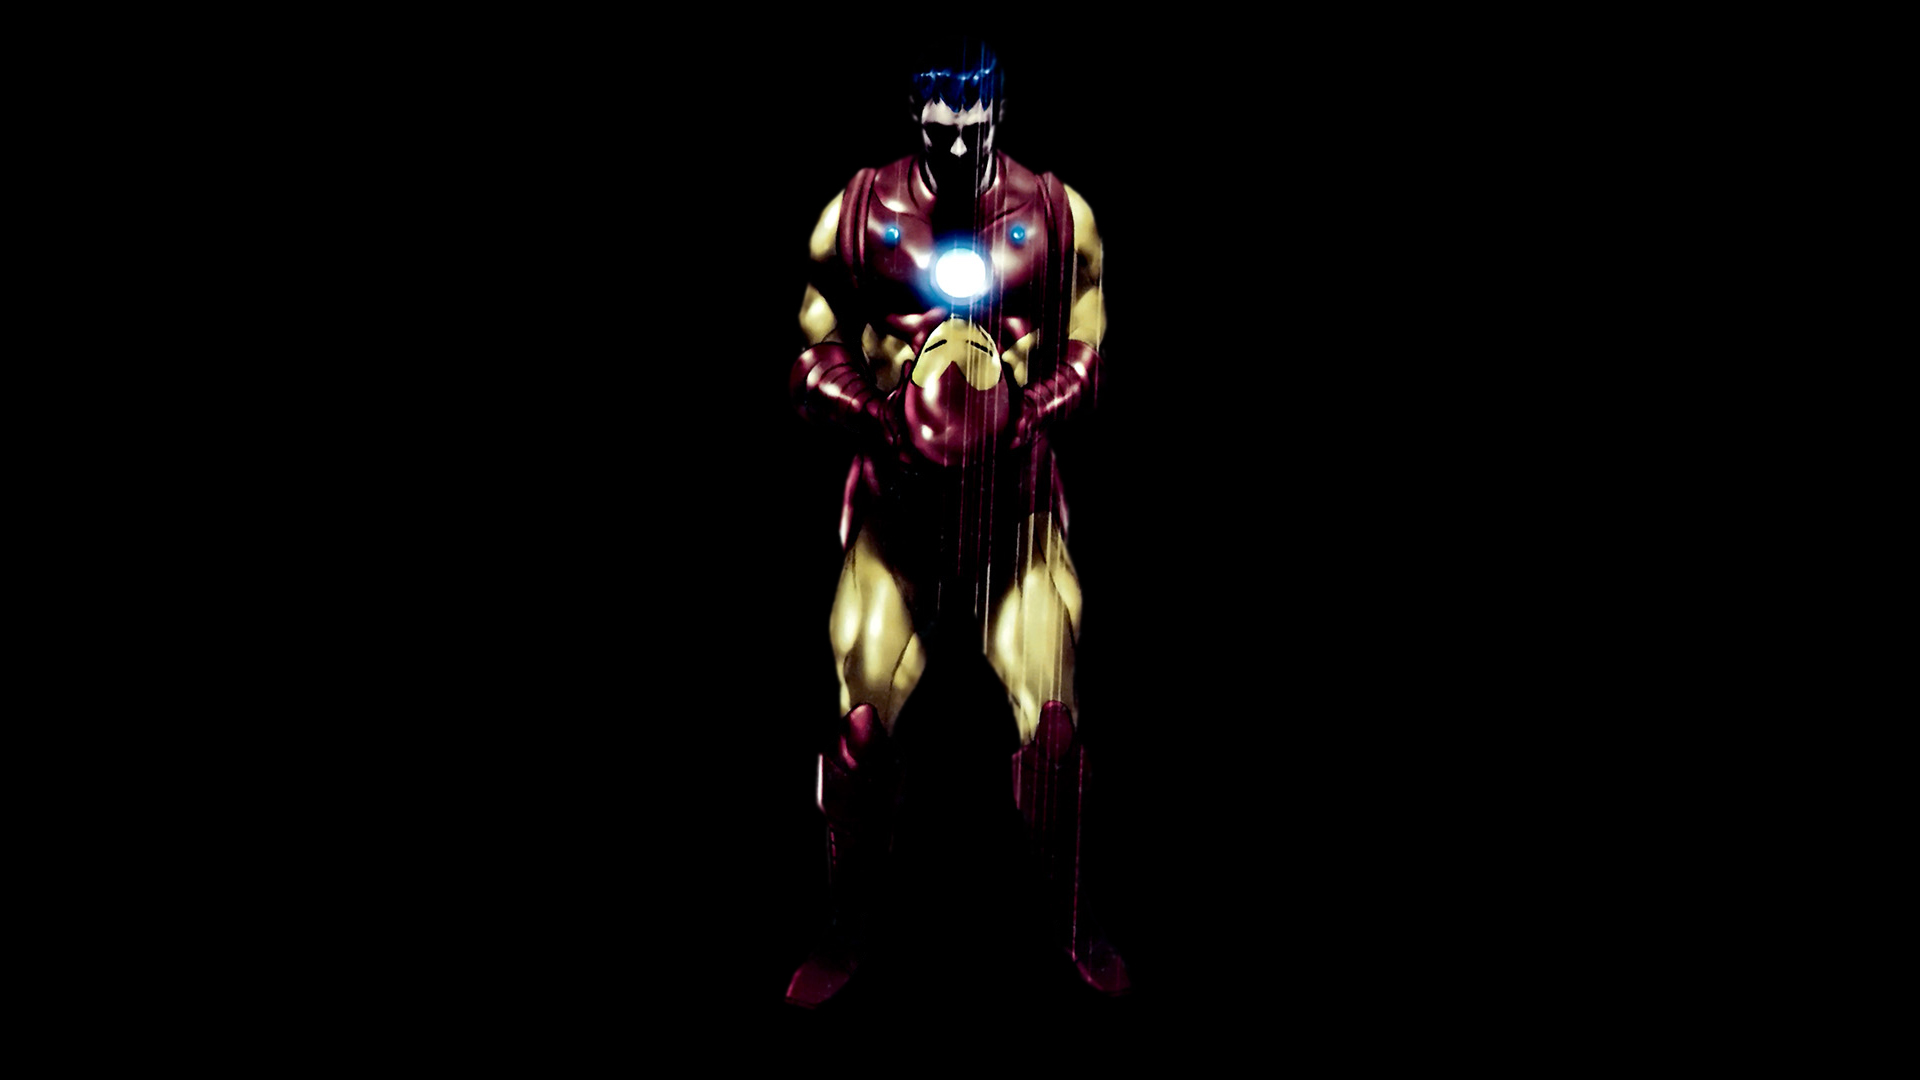 Iron Man Wallpaper